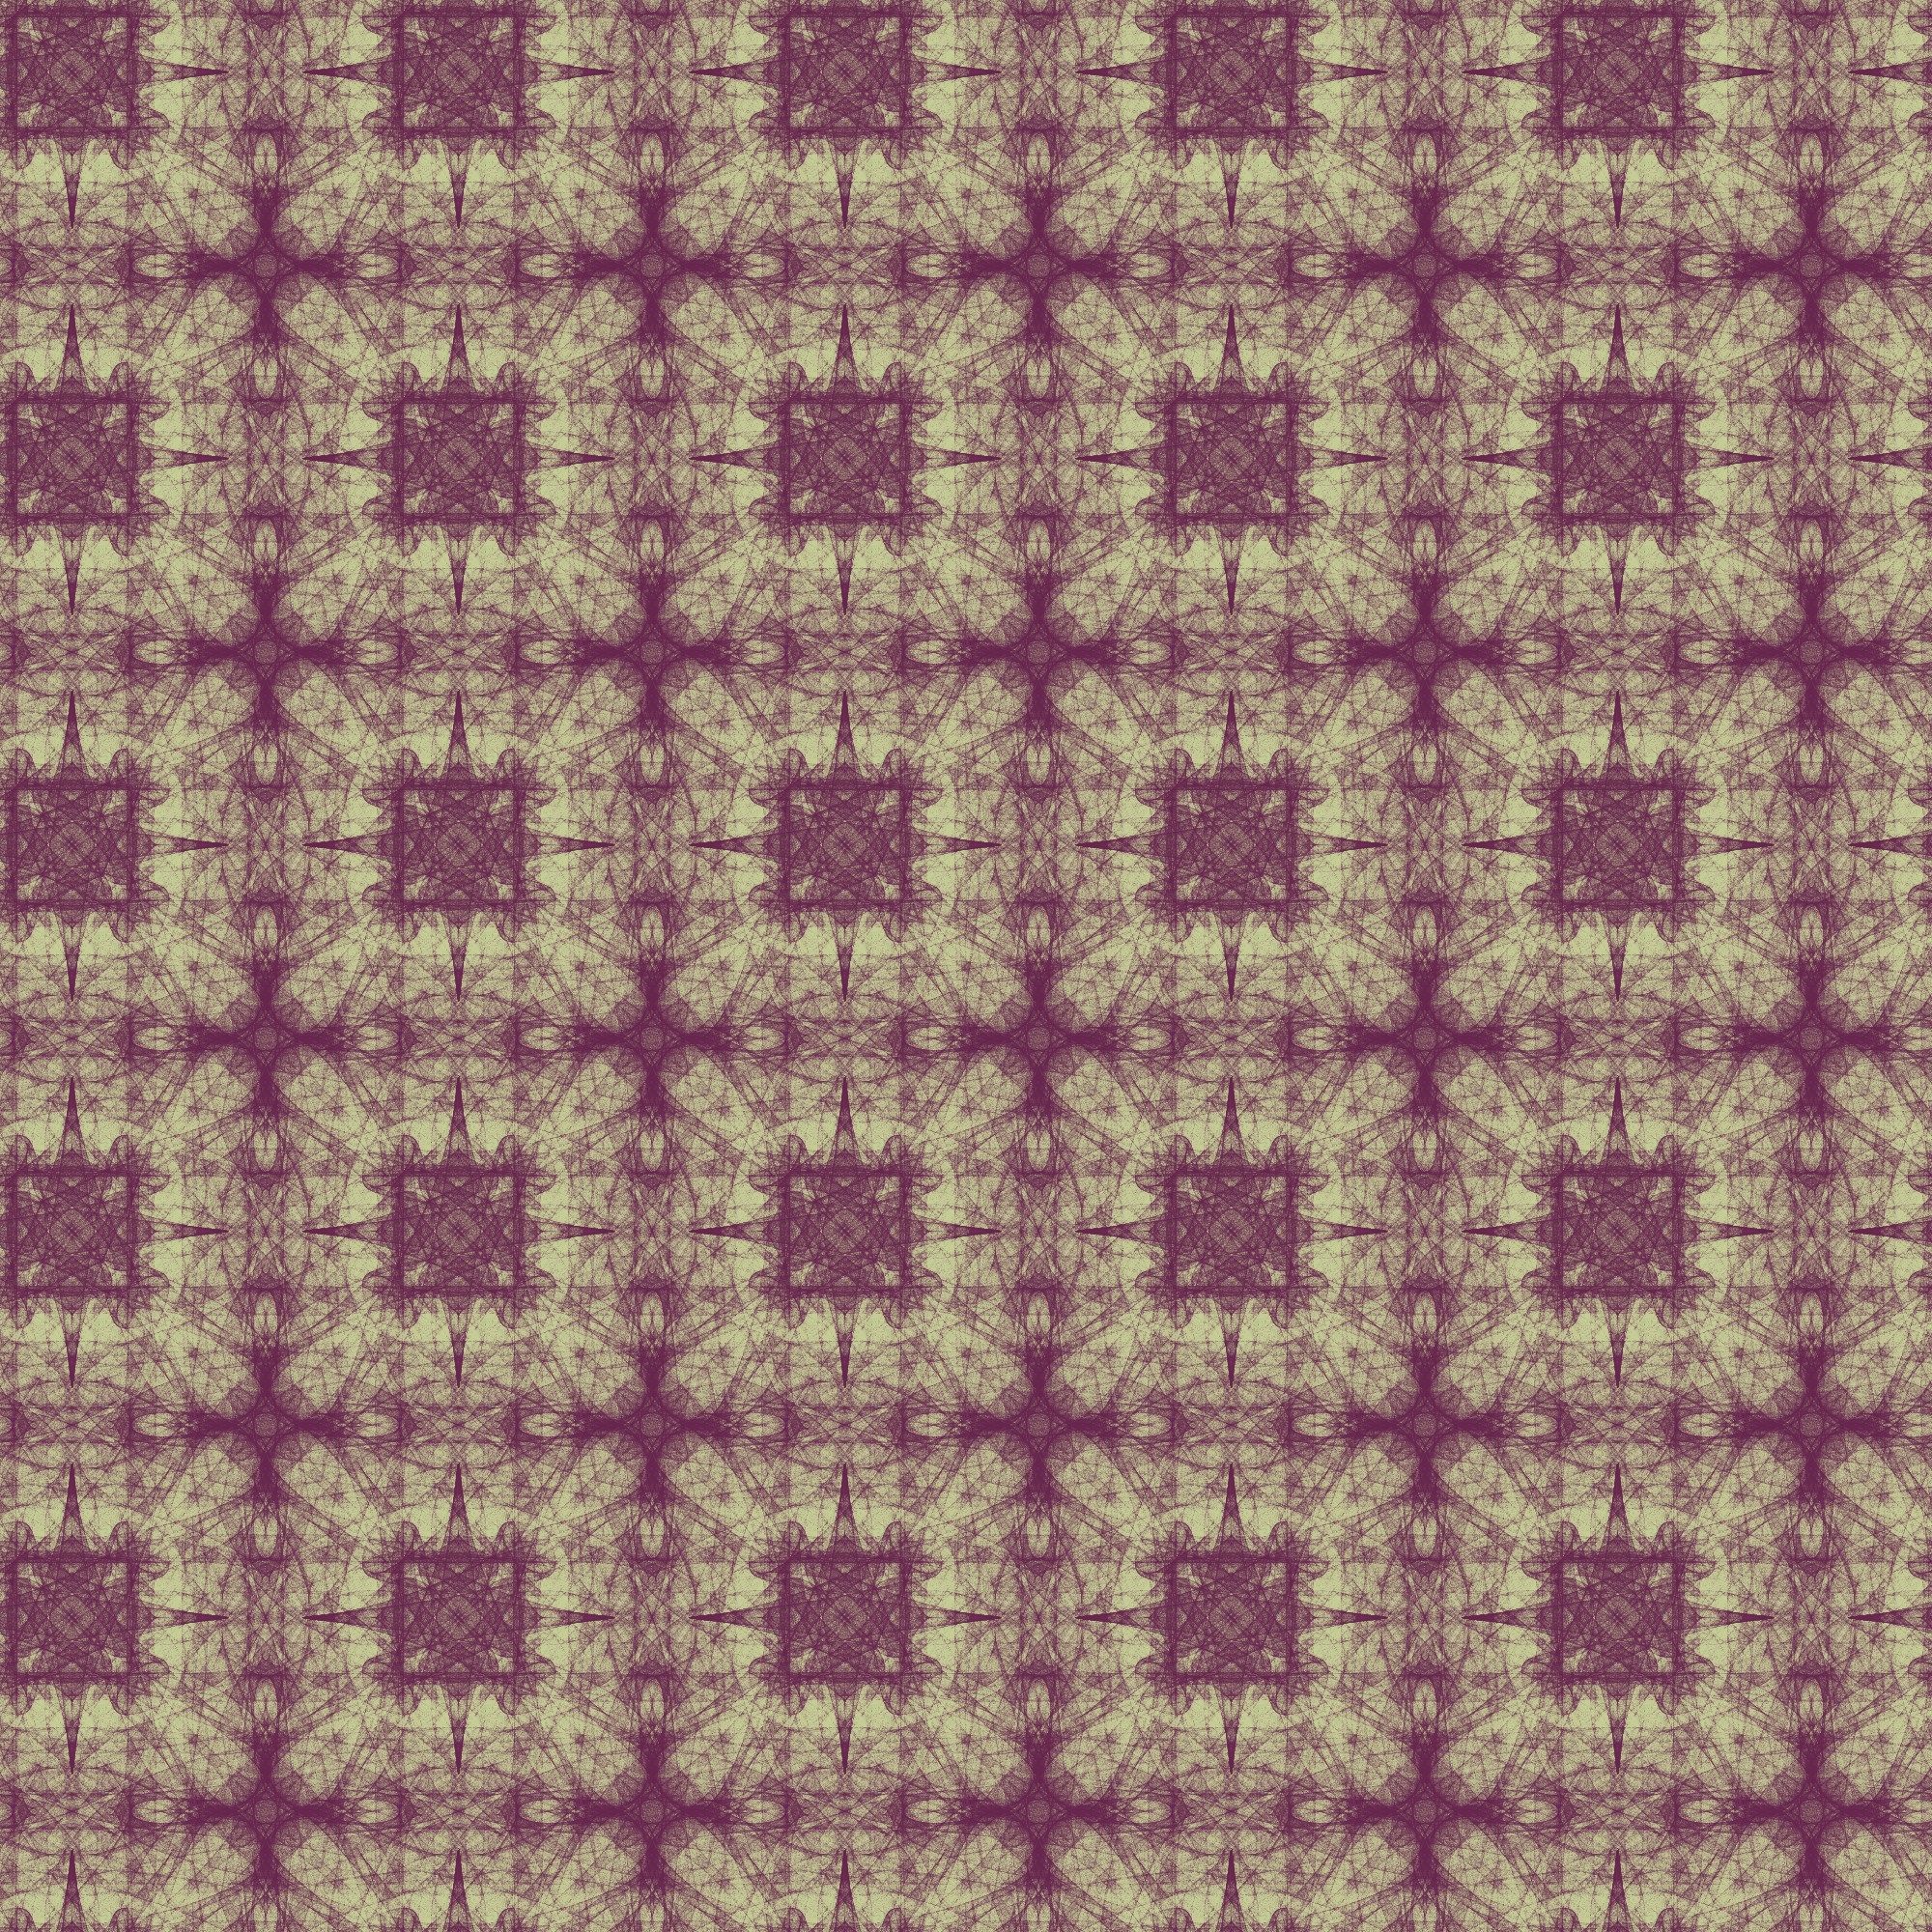 A 5x5 tiling each tile is 400 pixels on a side the final image is 2000x2000 pixels